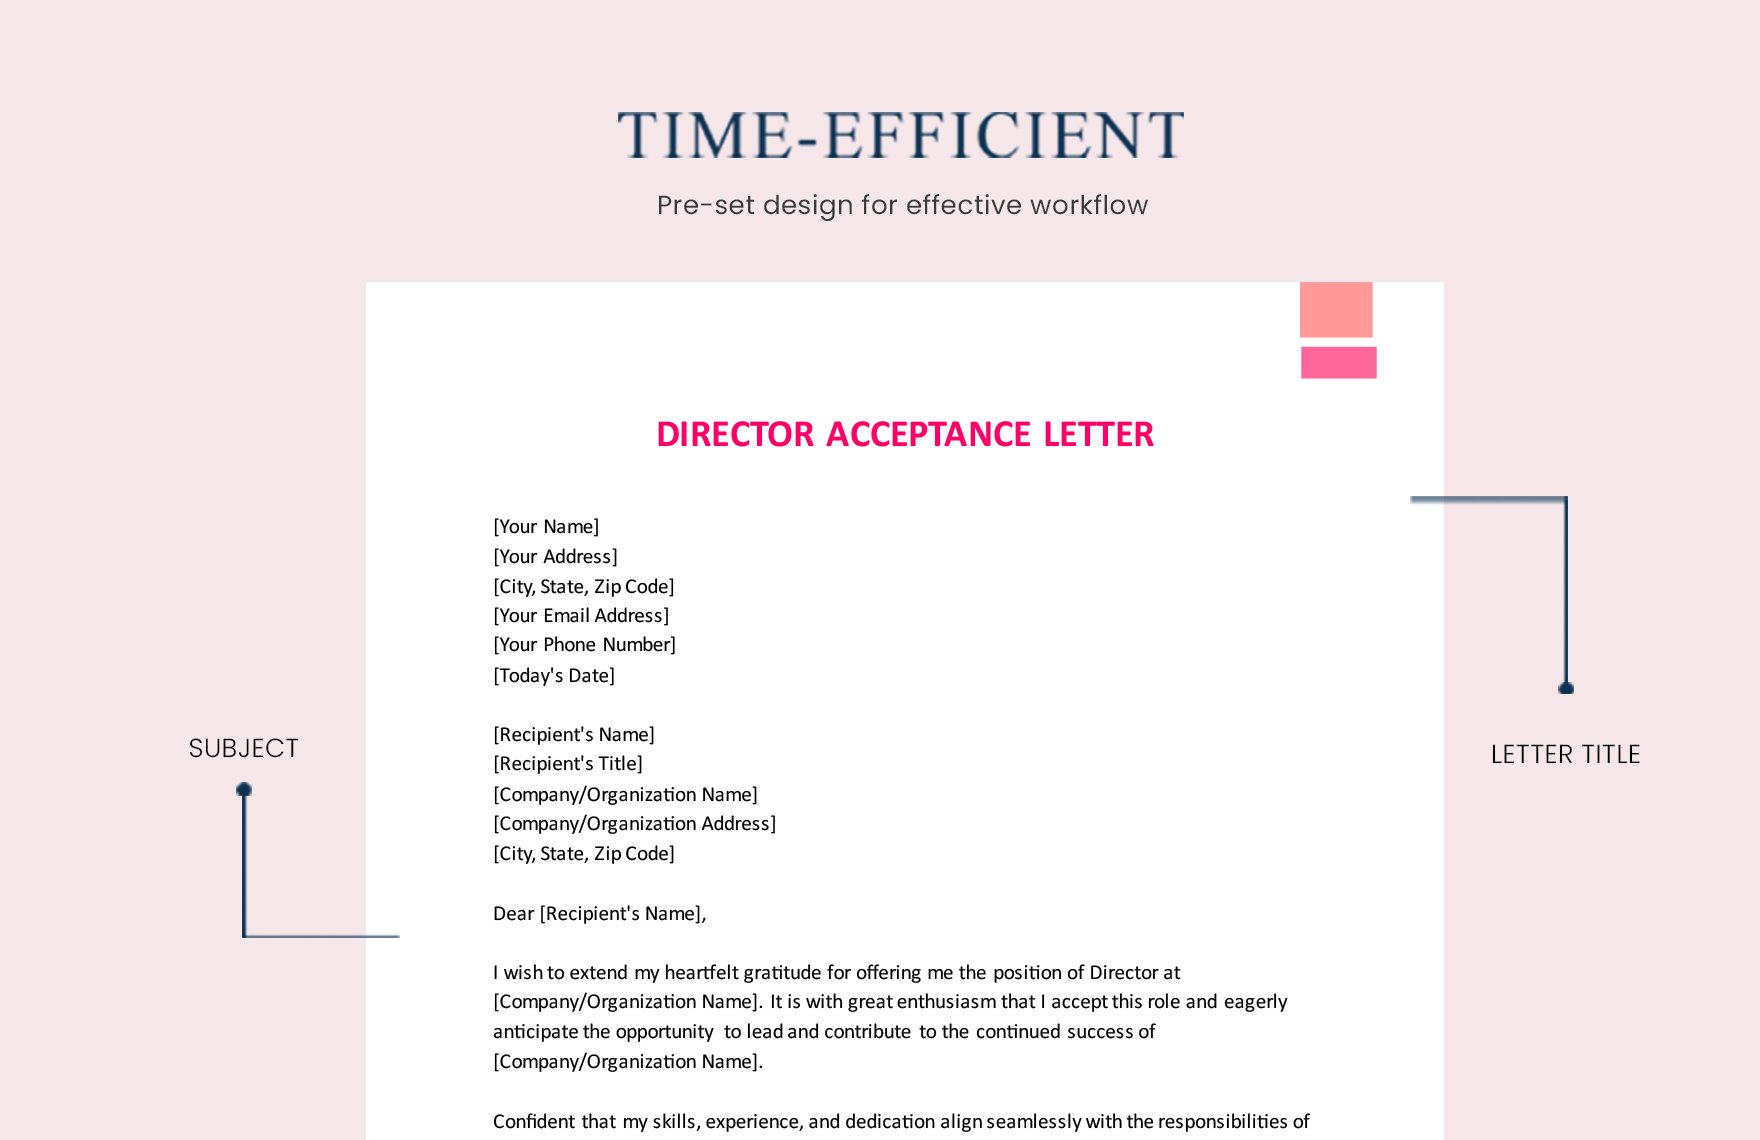 Director Acceptance Letter